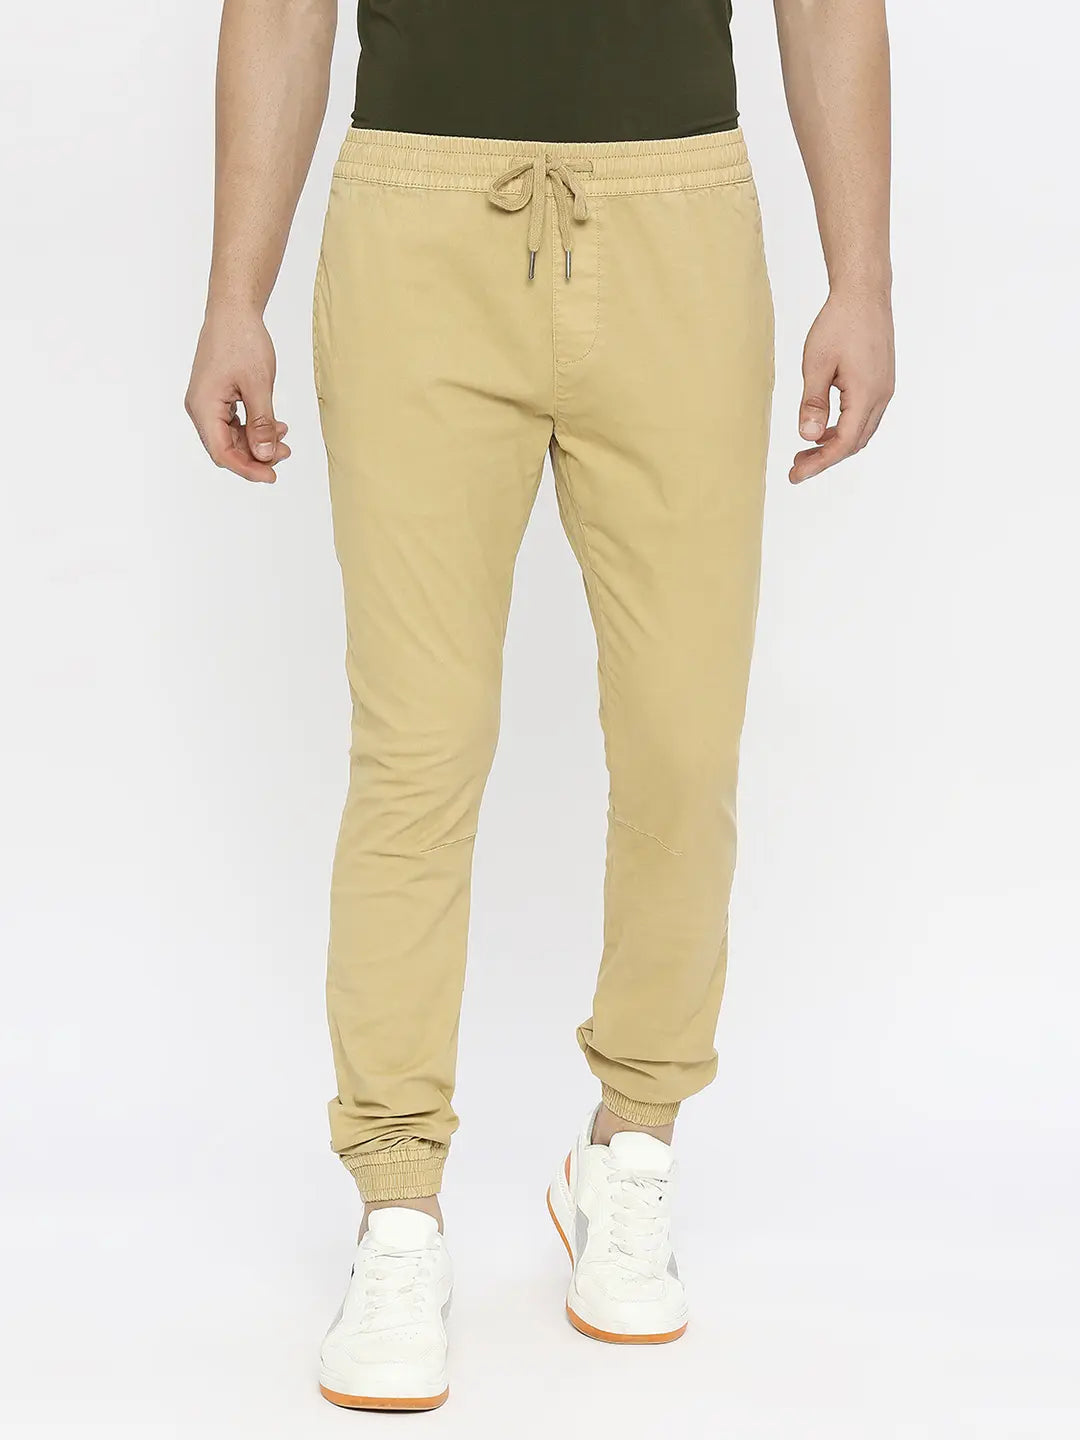 Buy Men Khaki Solid Regular Fit Trousers Online in India - Monte Carlo